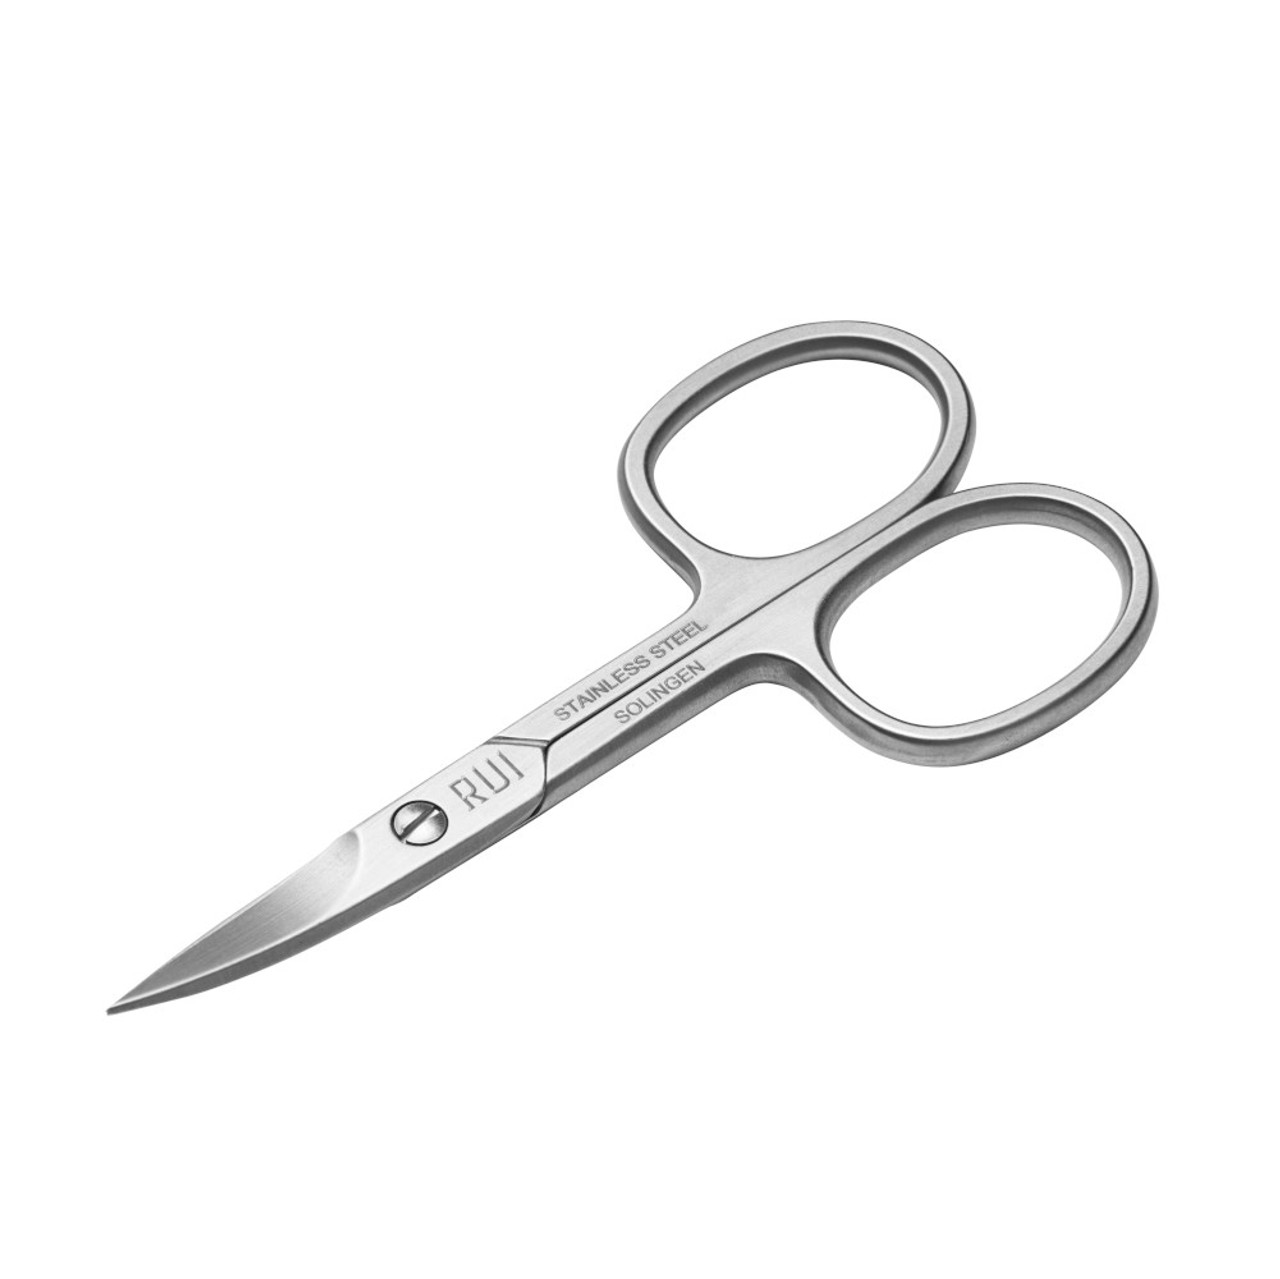 Kiehl Solingen 9cm Professional Nail Scissors, Curved Blade - KnifeCenter -  4023 09 5346